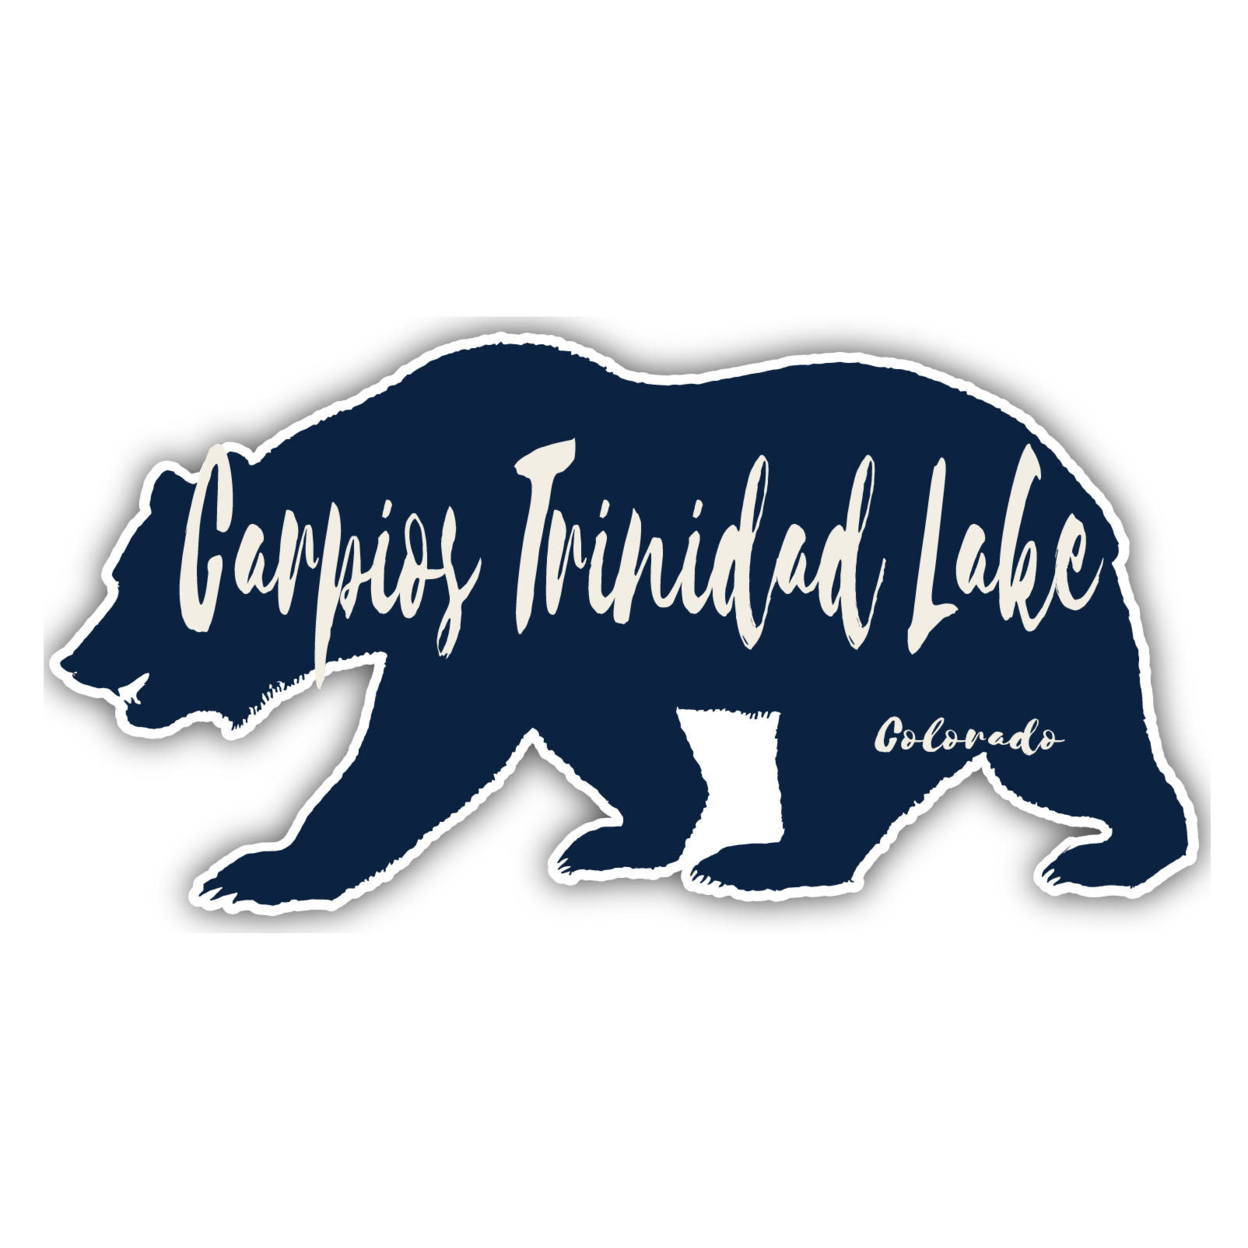 Carpios Trinidad Lake Colorado Souvenir Decorative Stickers (Choose Theme And Size) - Single Unit, 4-Inch, Bear